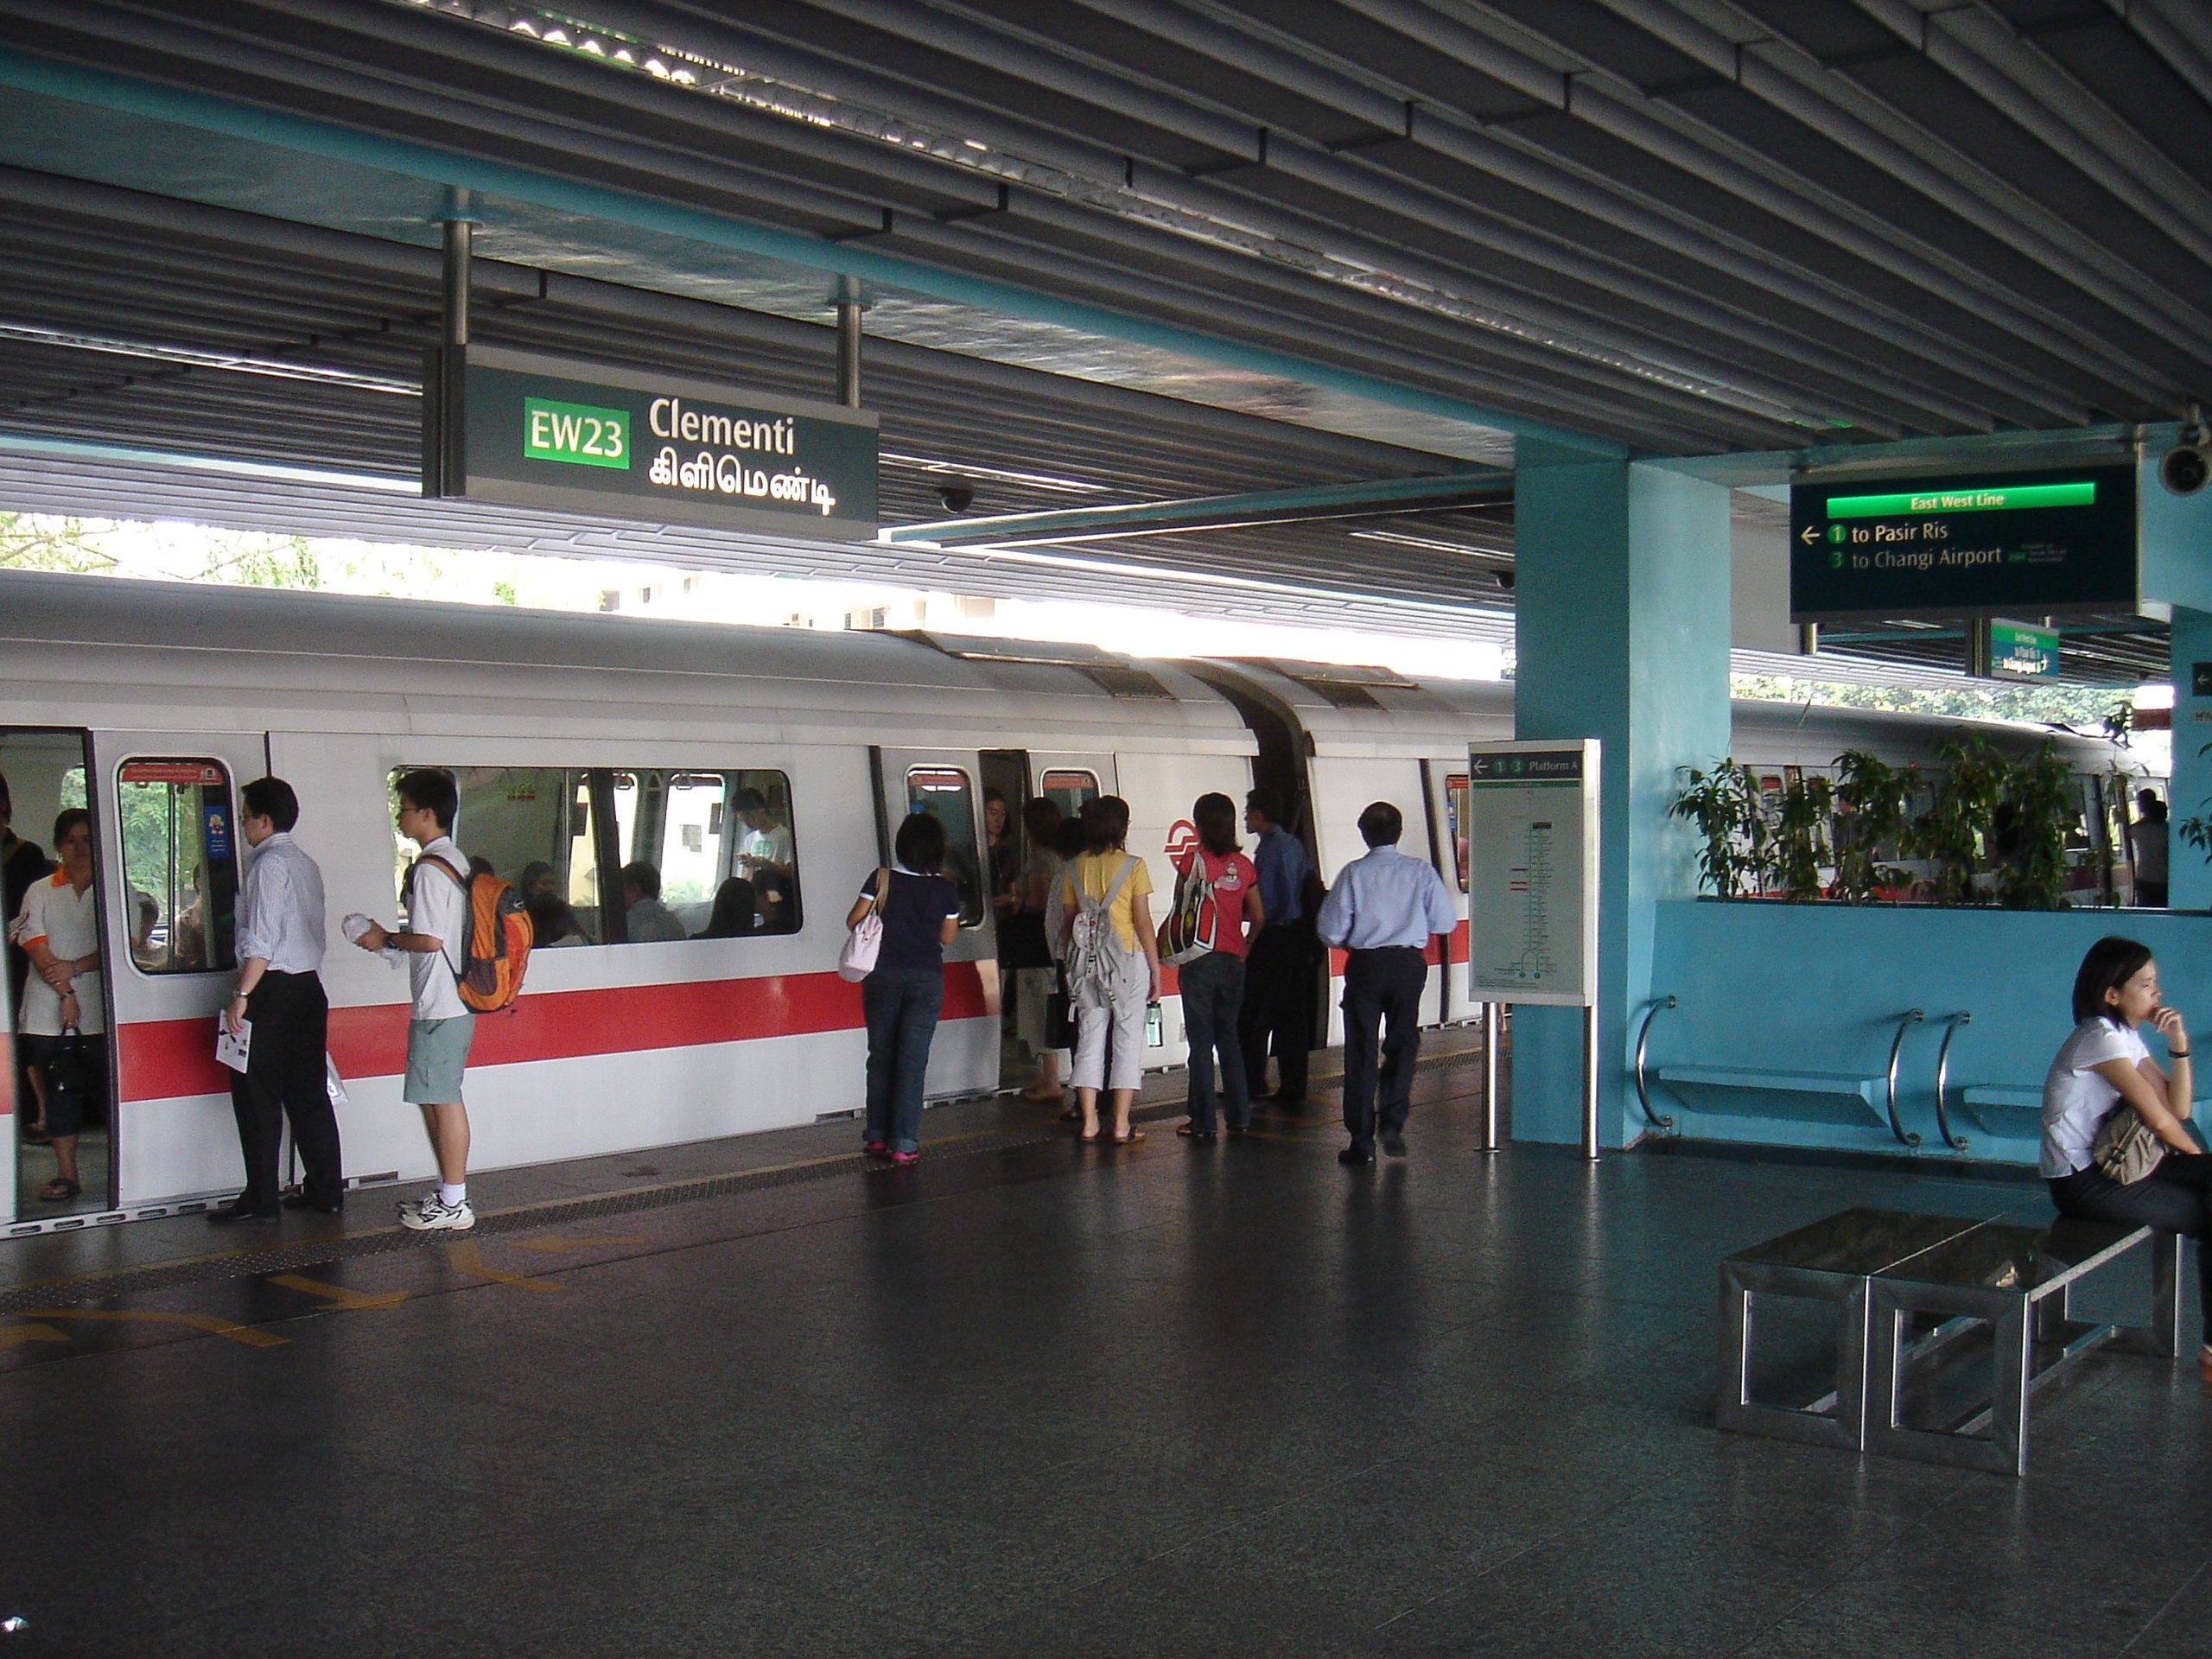 East west Green Line Singapore EW23 Clementi MRT Station